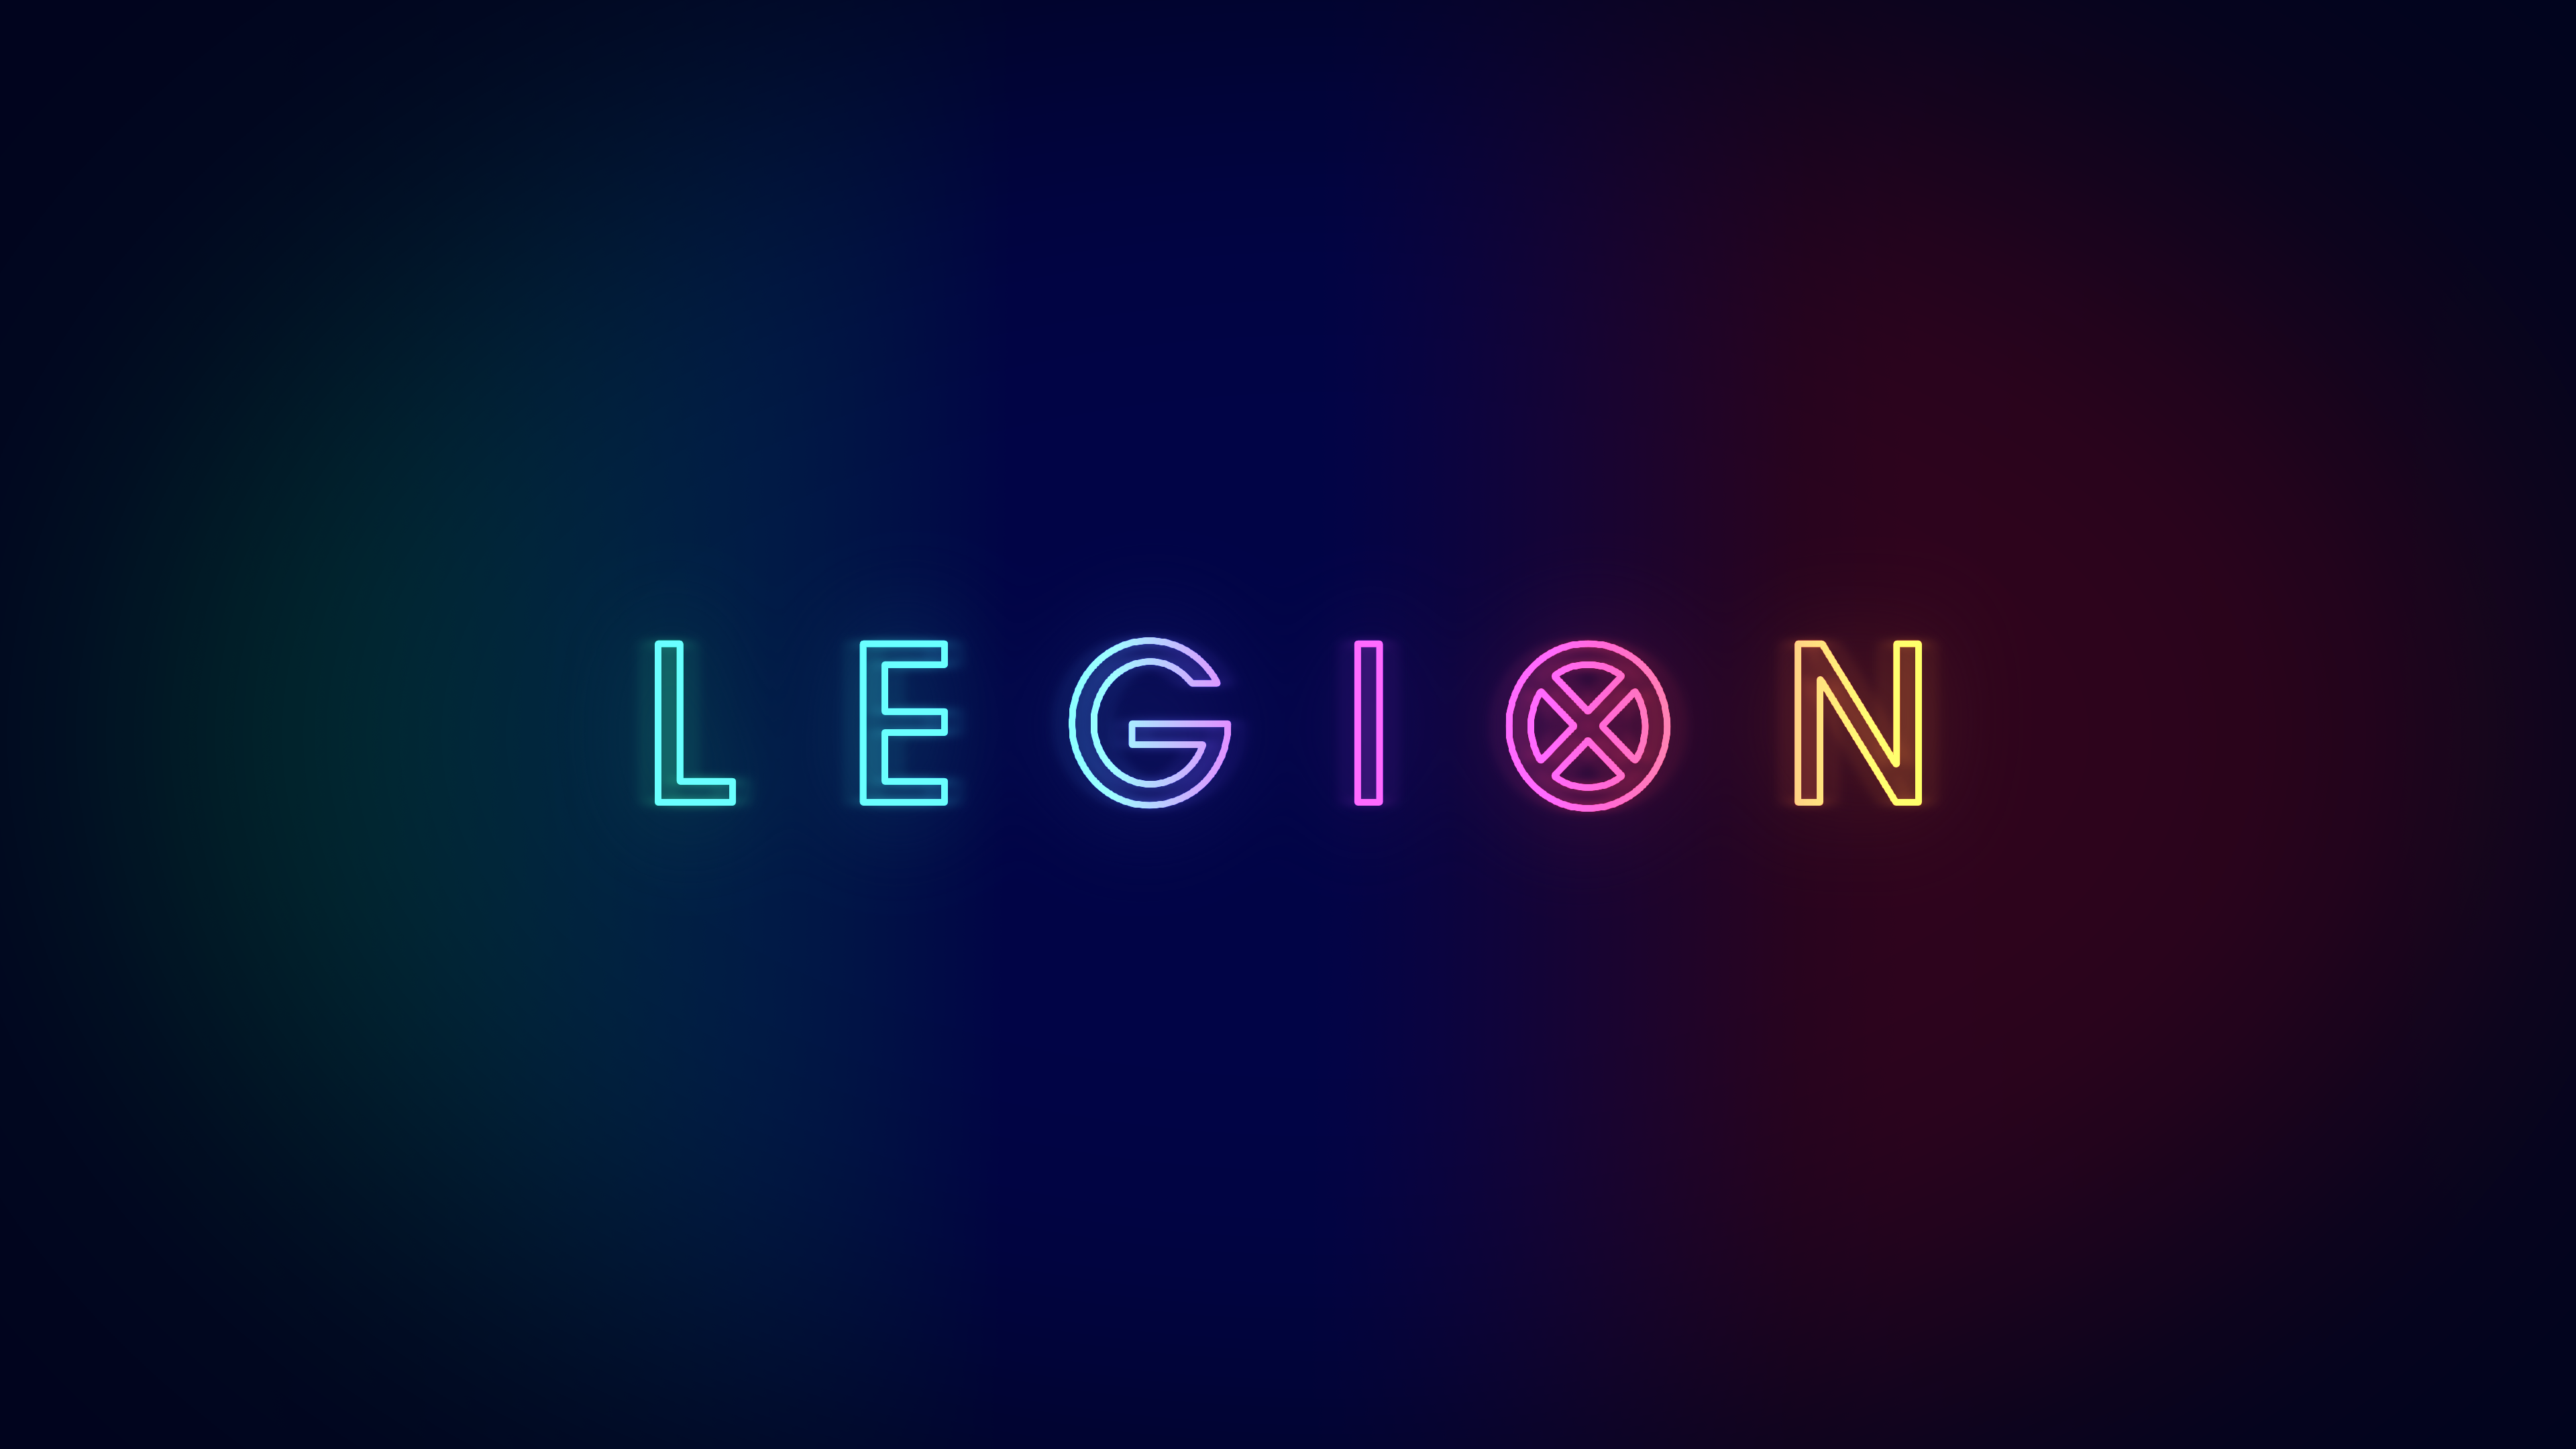 Neon Legion Wallpaper [3840 x 2160]